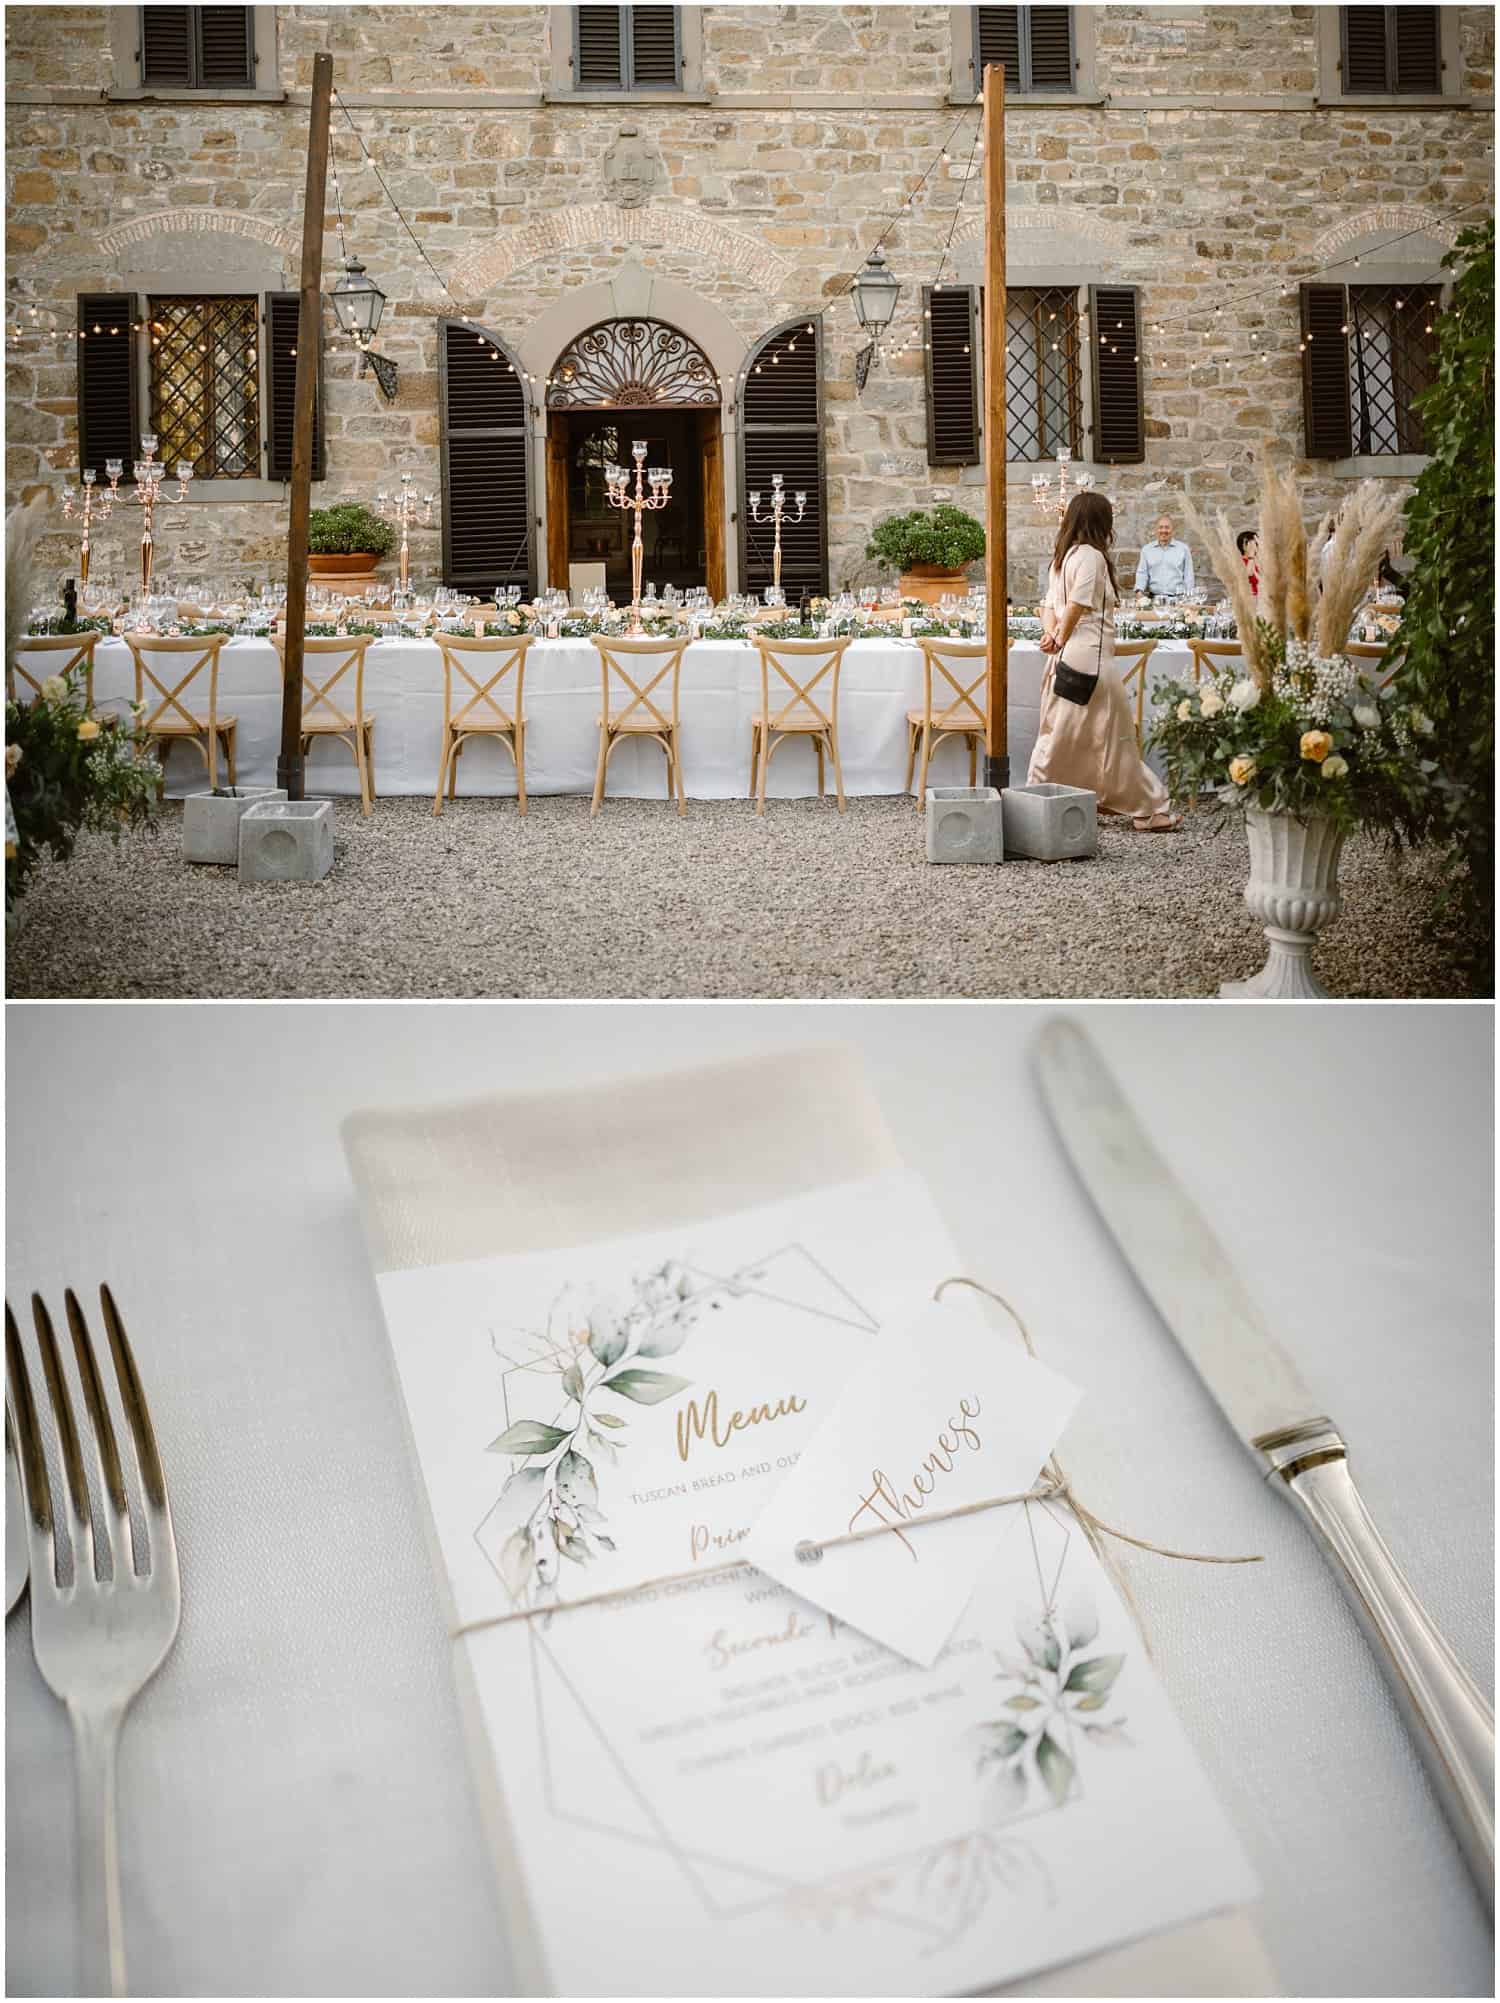 Imperial table at the wedding venue in Tuscany Borgo Castelvecchi